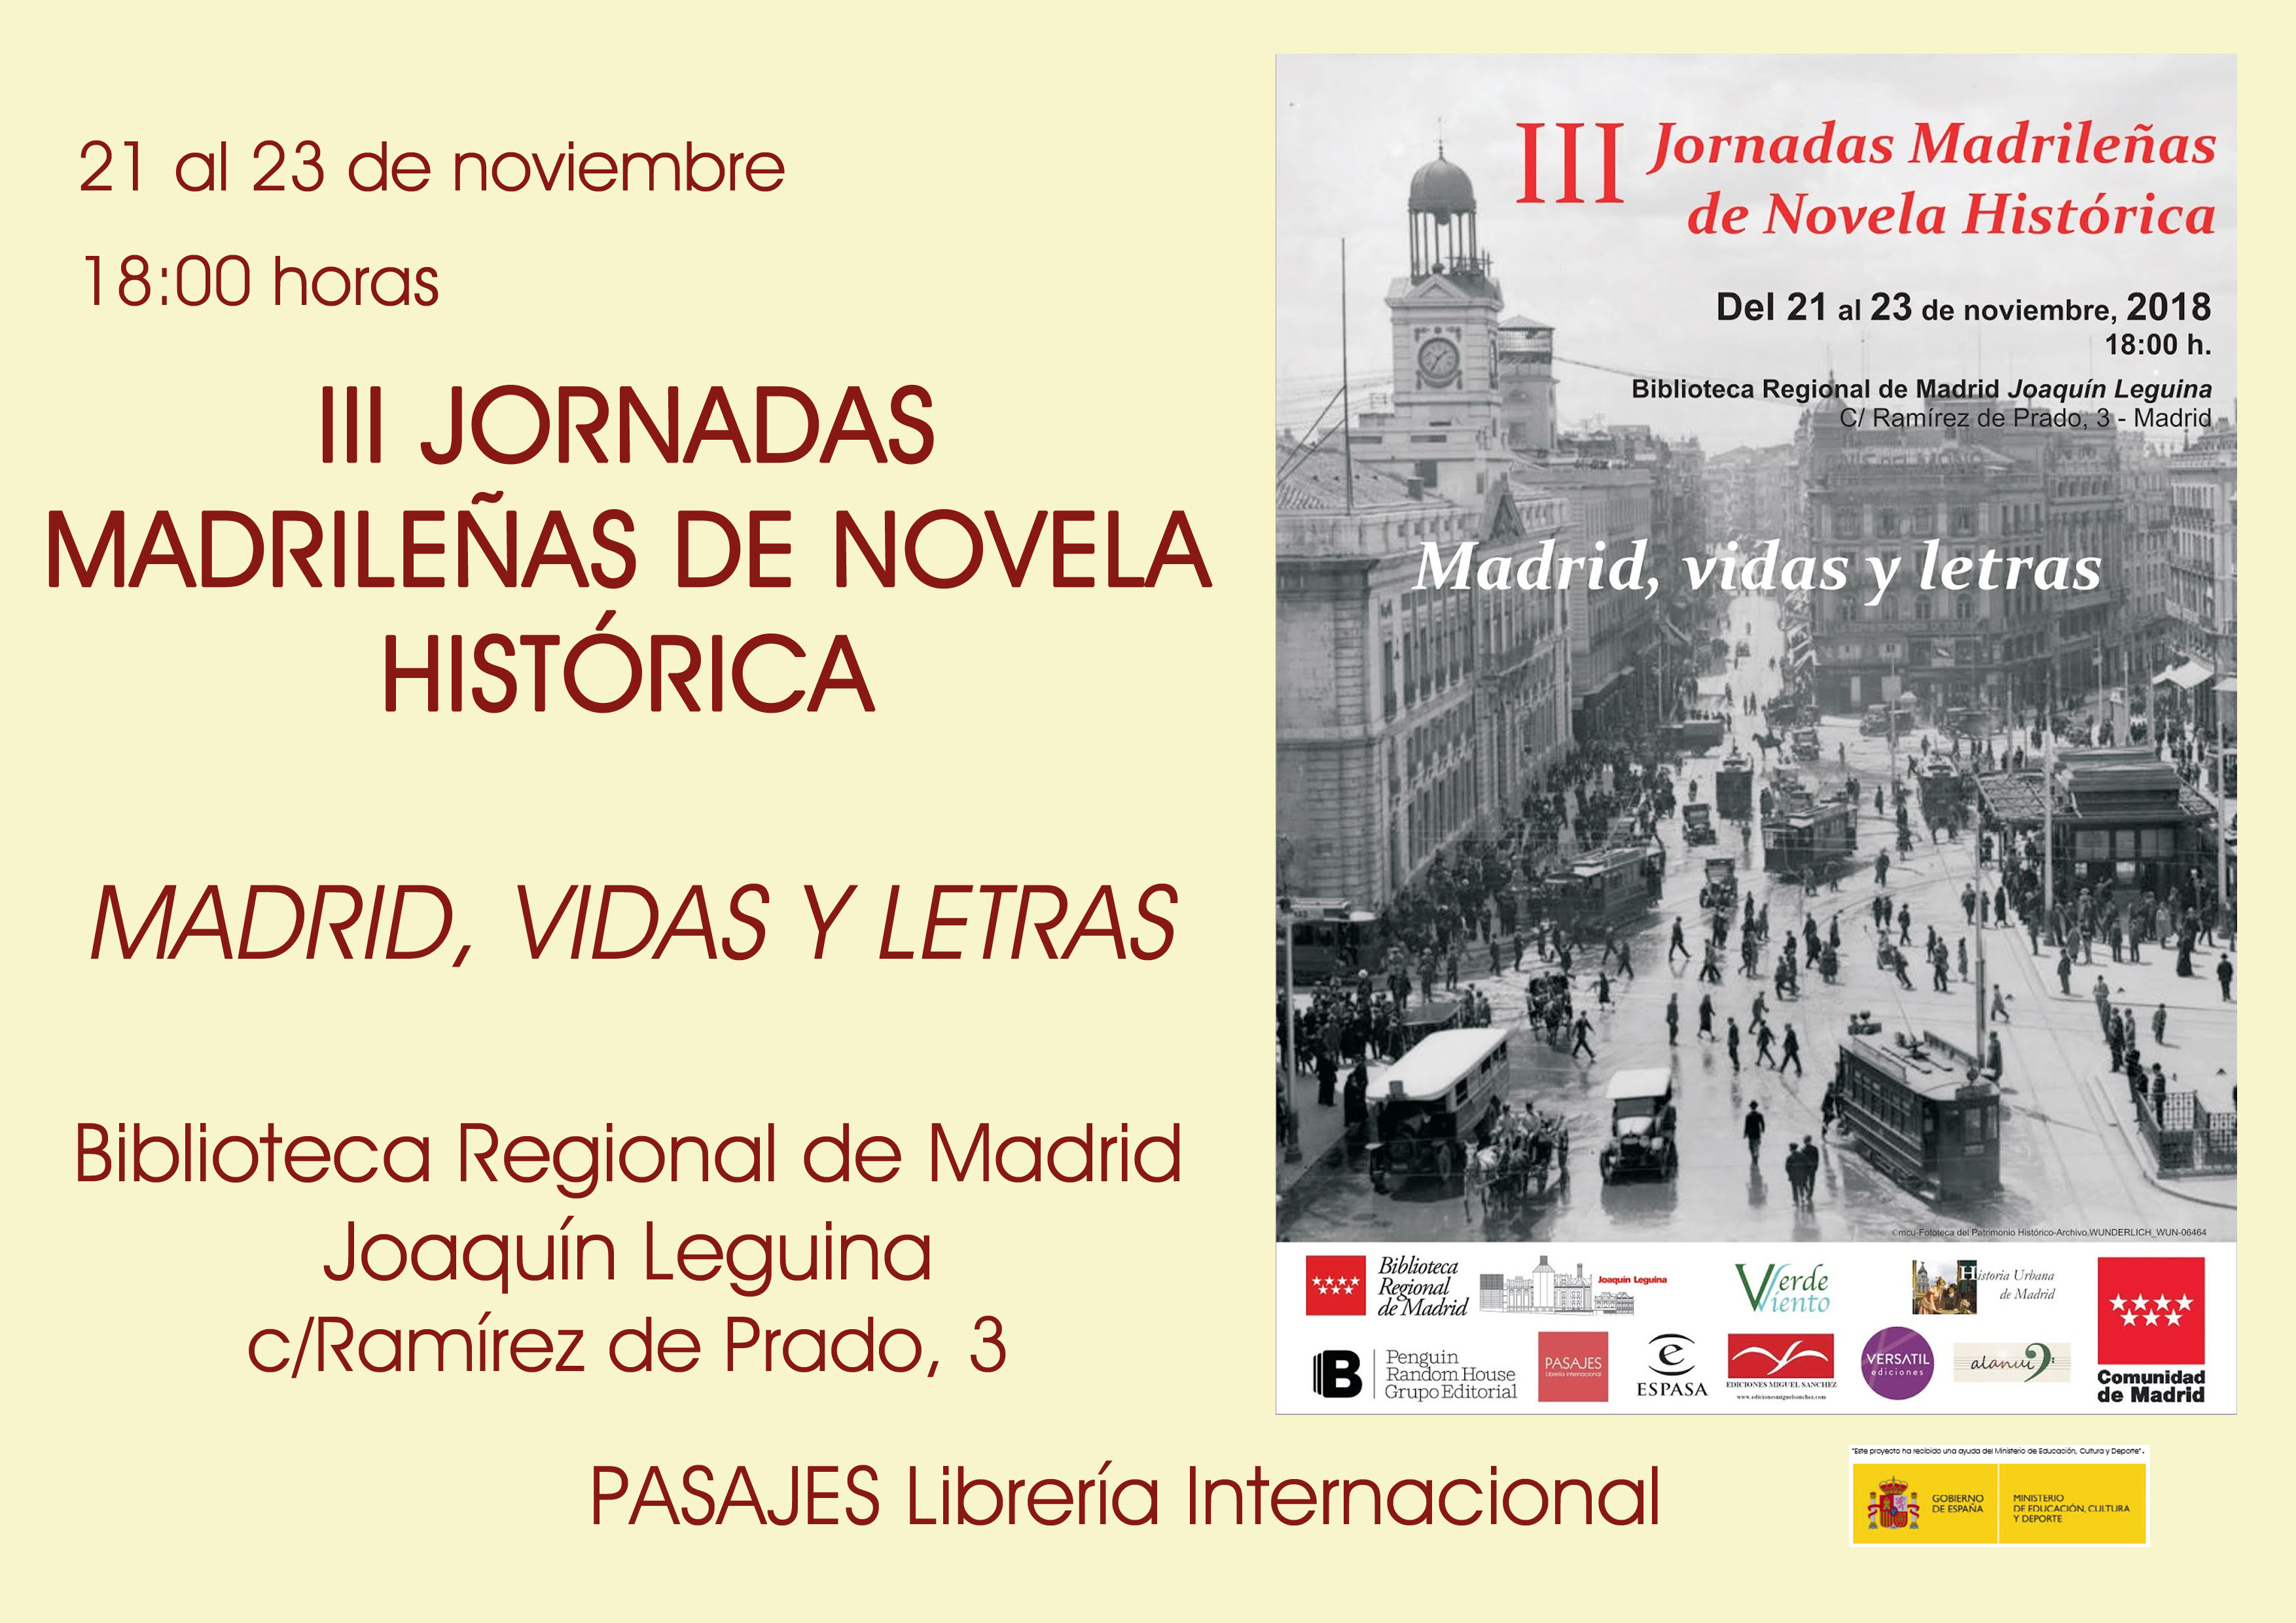 III JORNADAS MADRILEÑAS DE NOVELA HISTÓRICA en la Biblioteca Regional Joaquín Leguina